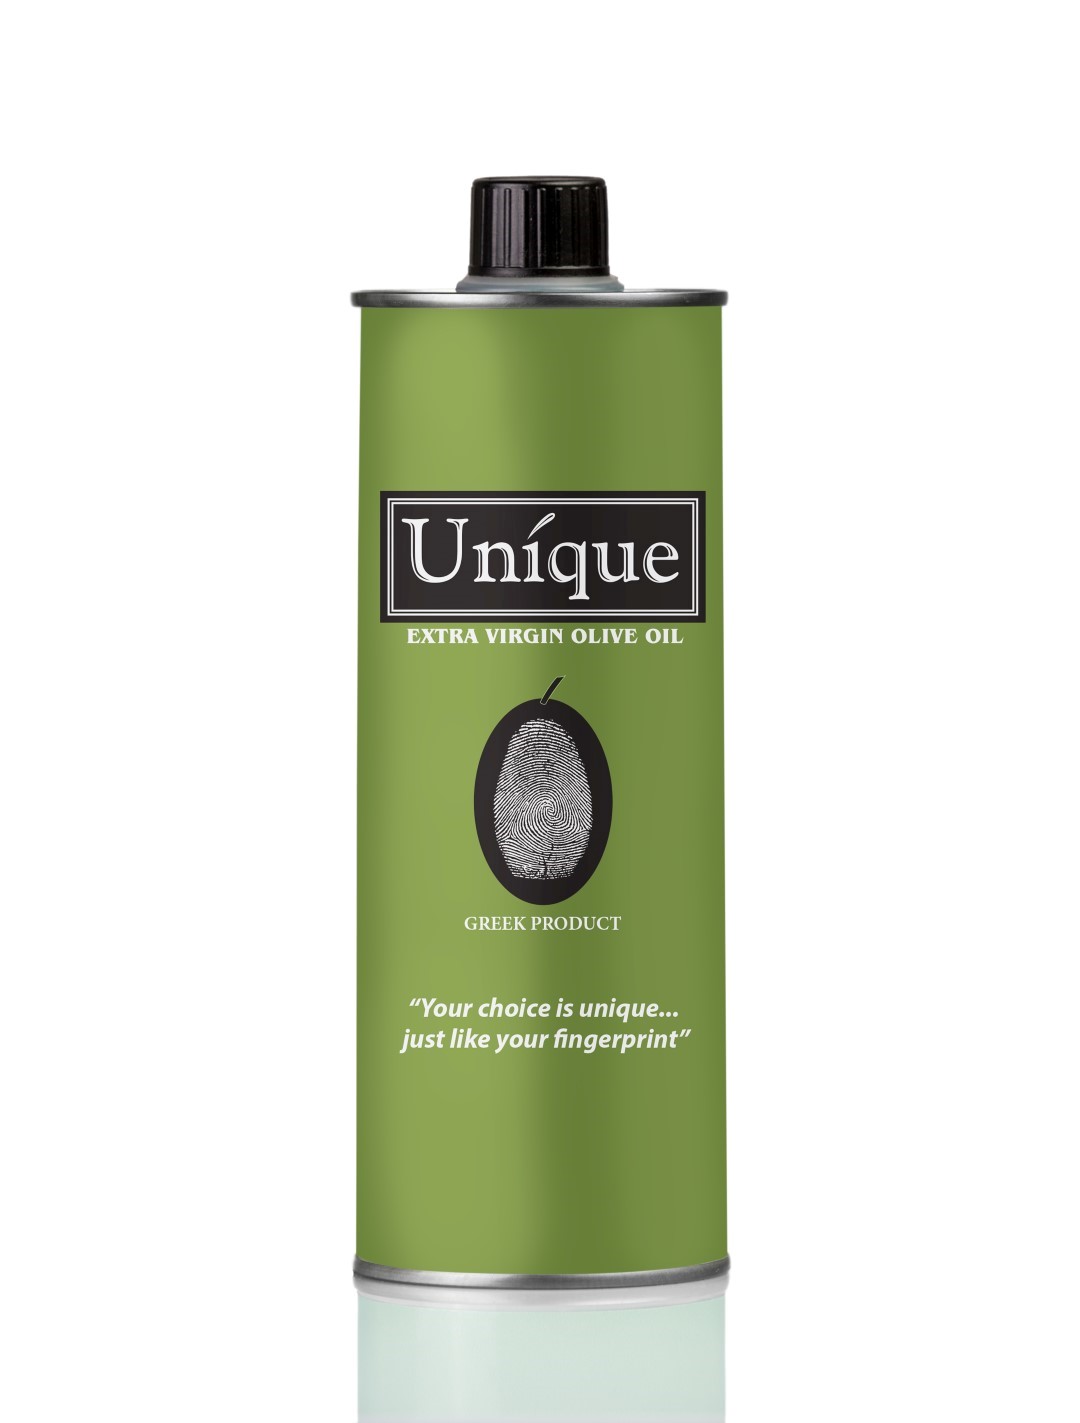 UGP (UniqueGreekProducts) – Unique Extra Virgin Olive Oil (concept)